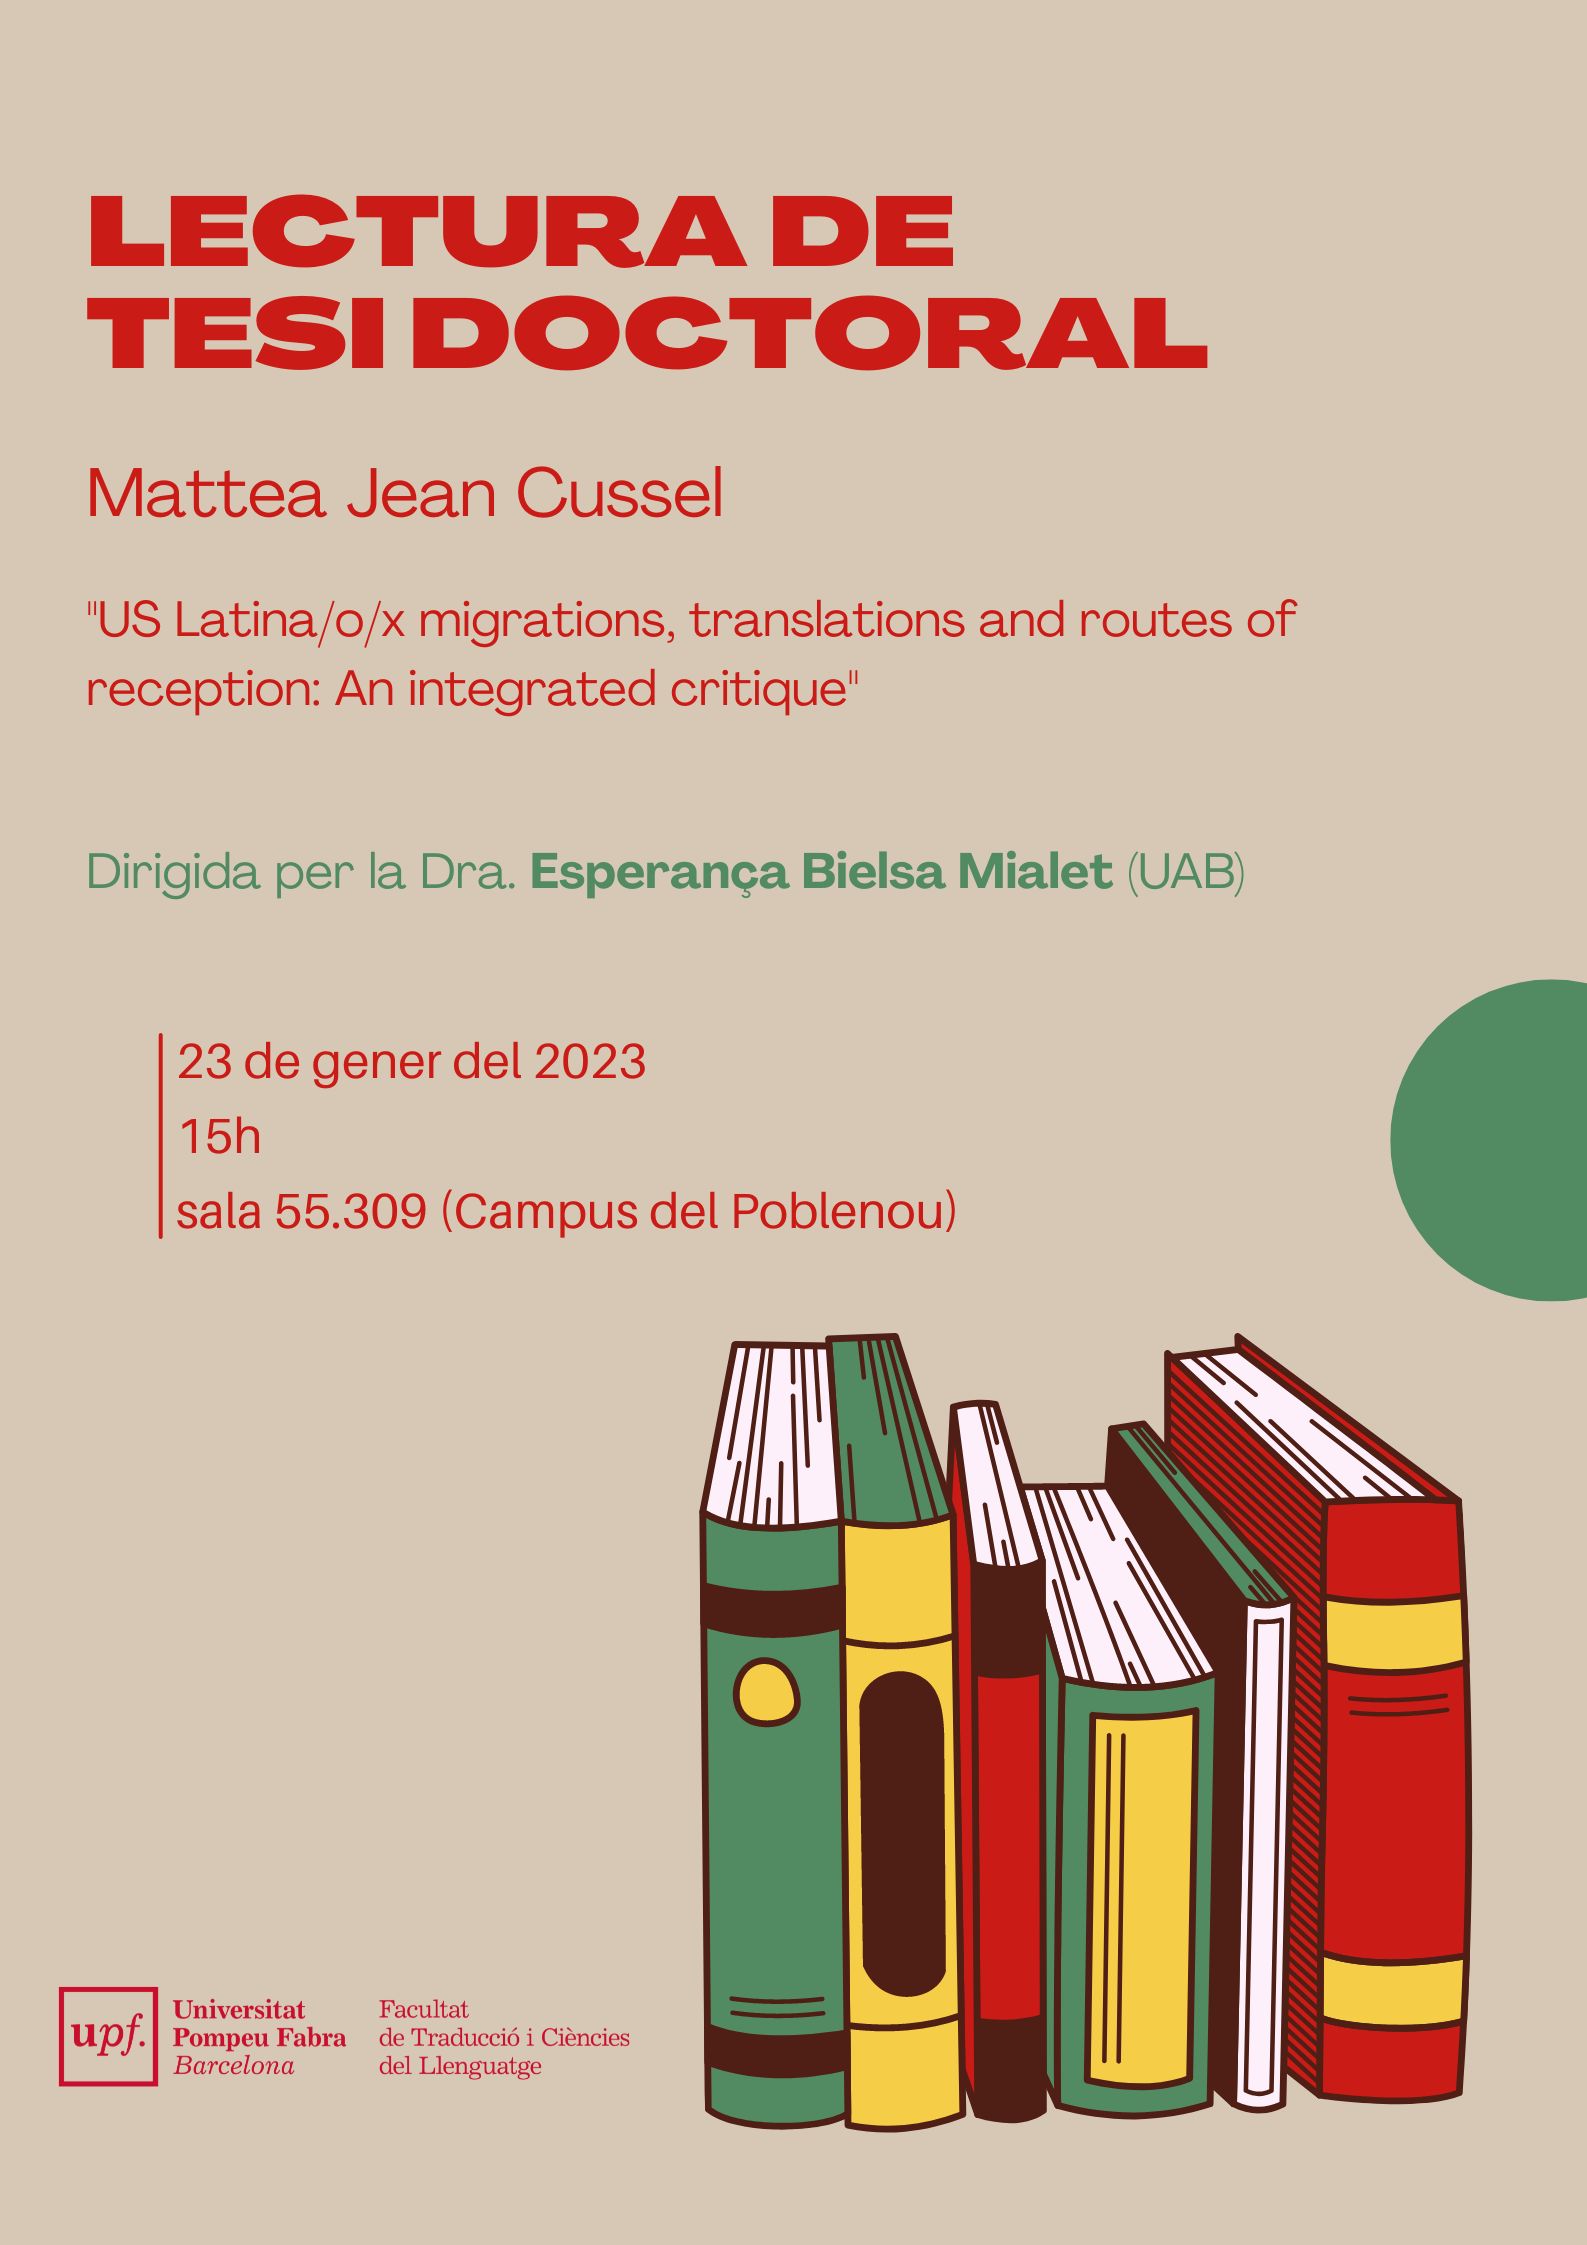 23/01/2023 Lectura de la tesi doctoral de Mattea Jean Cussel, a les 15.00 hores